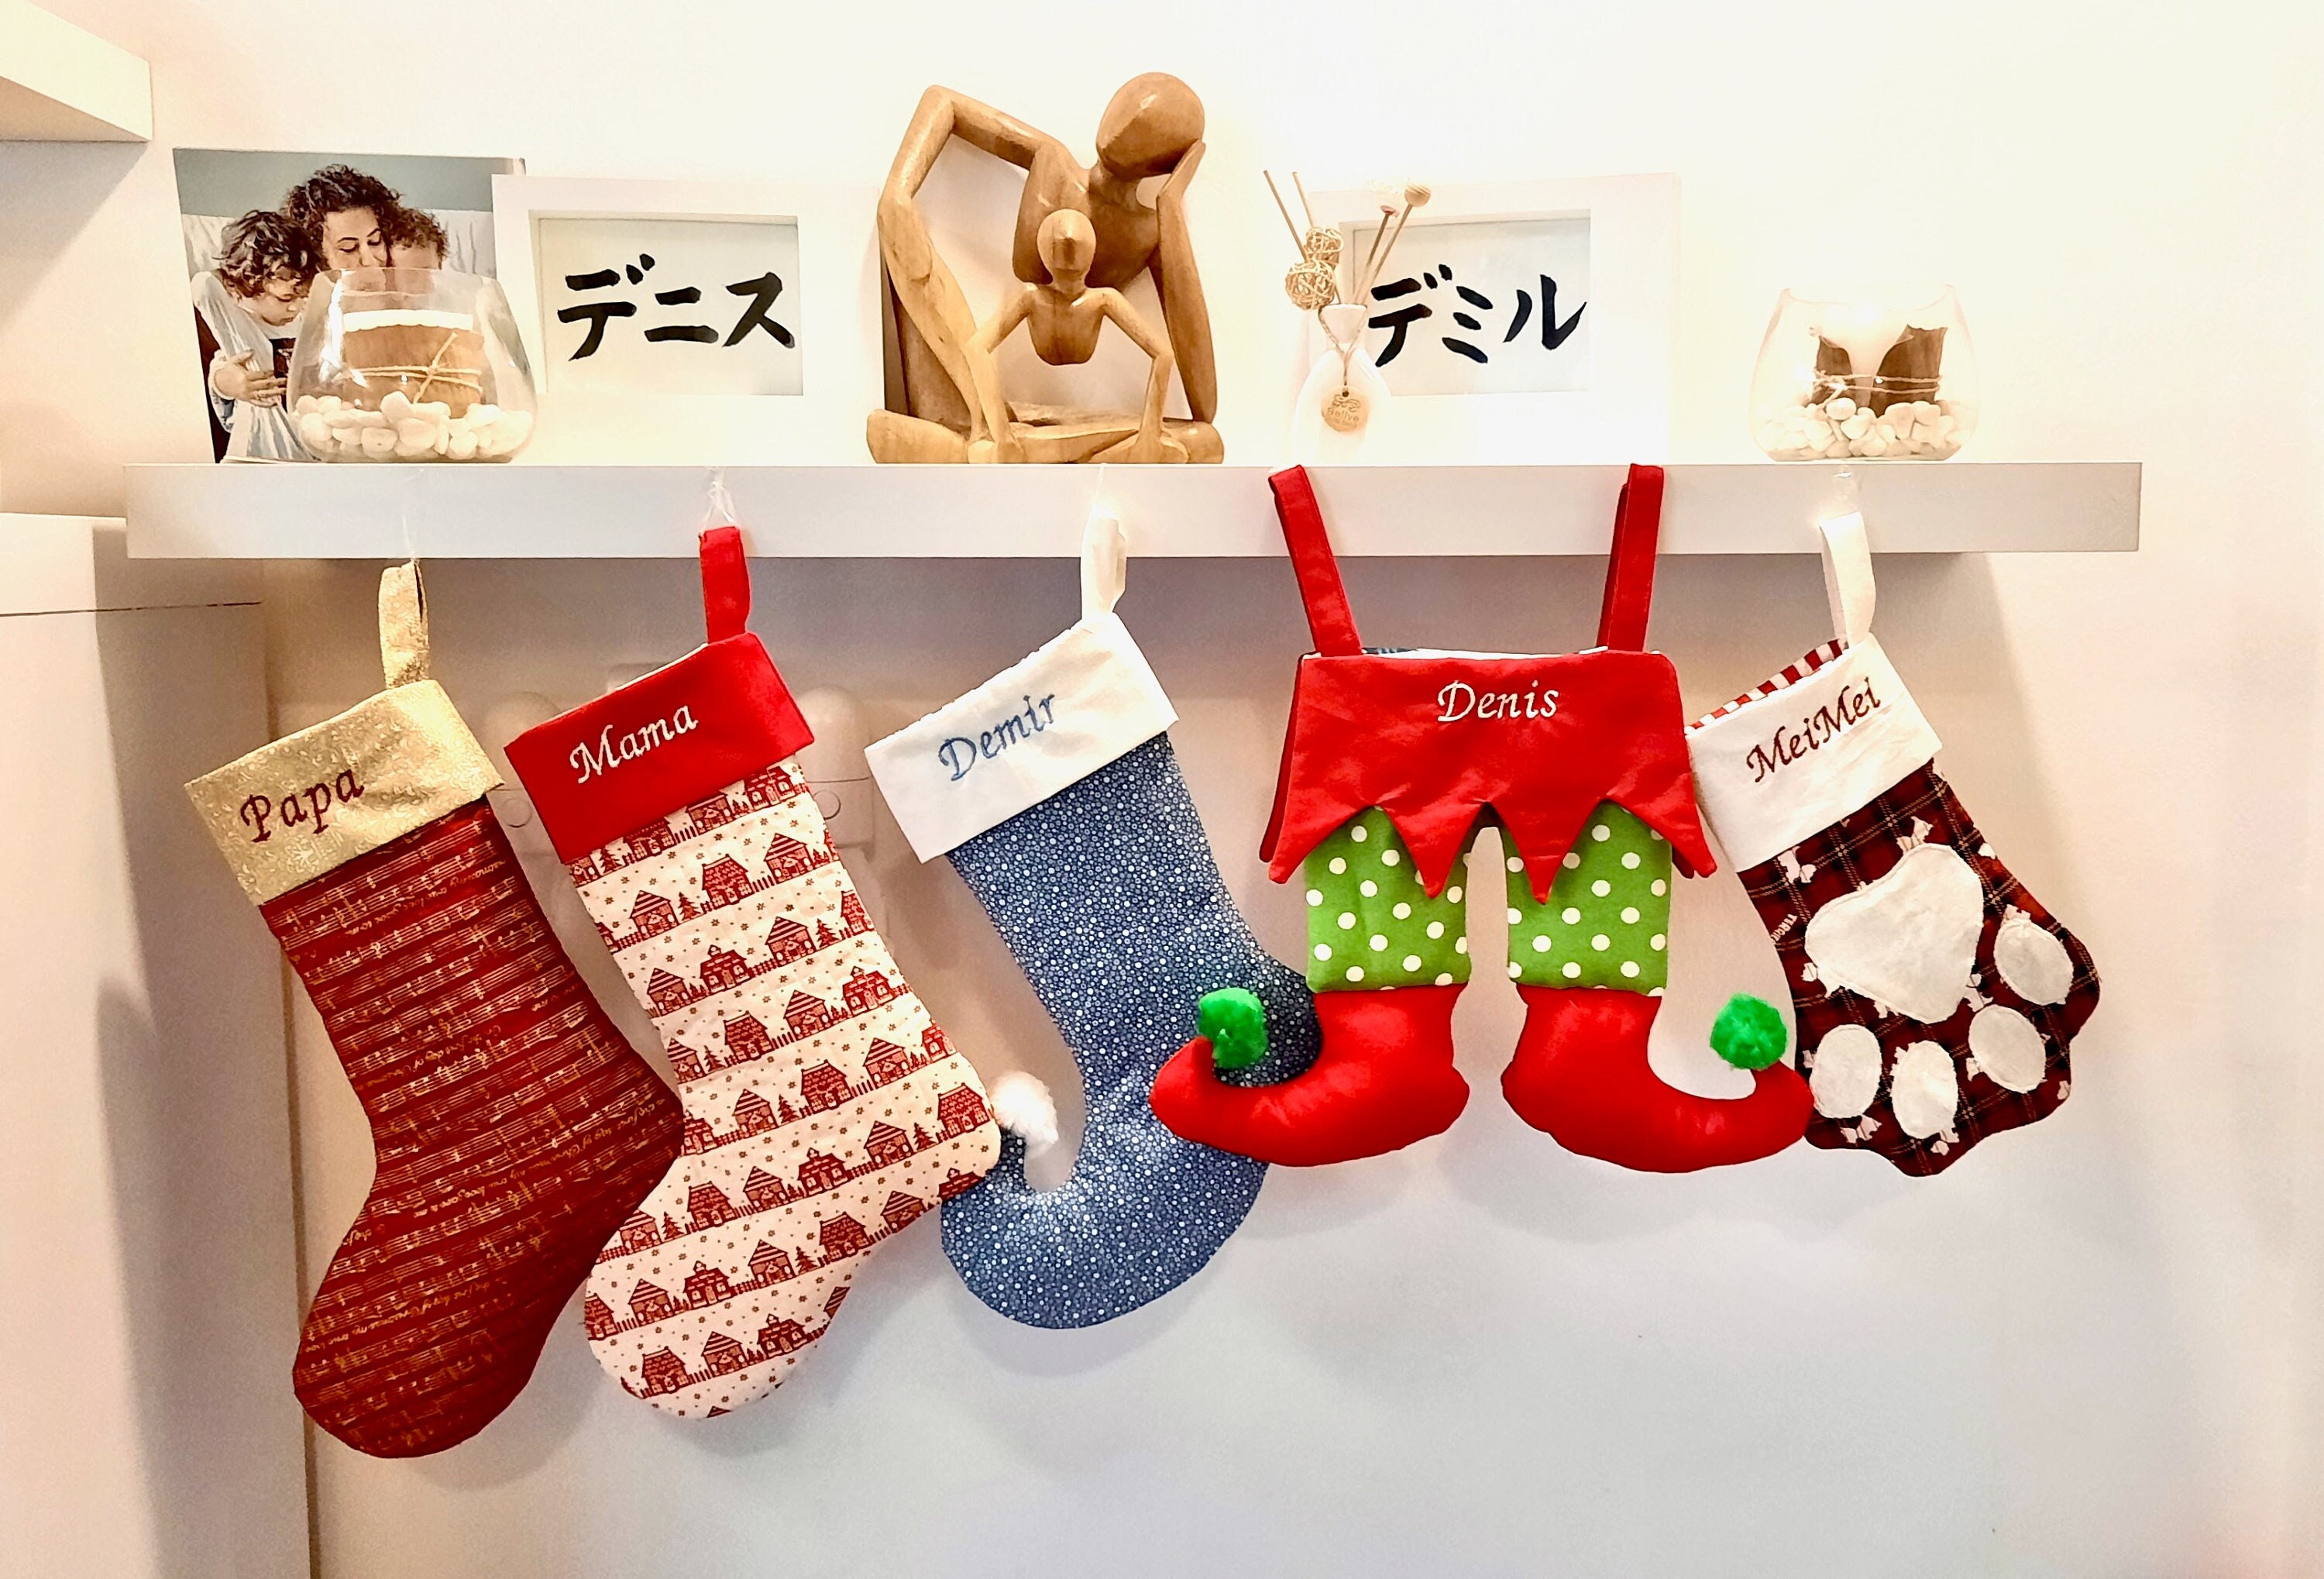 DIY Felted Stripe Christmas Stockings - Studio DIY